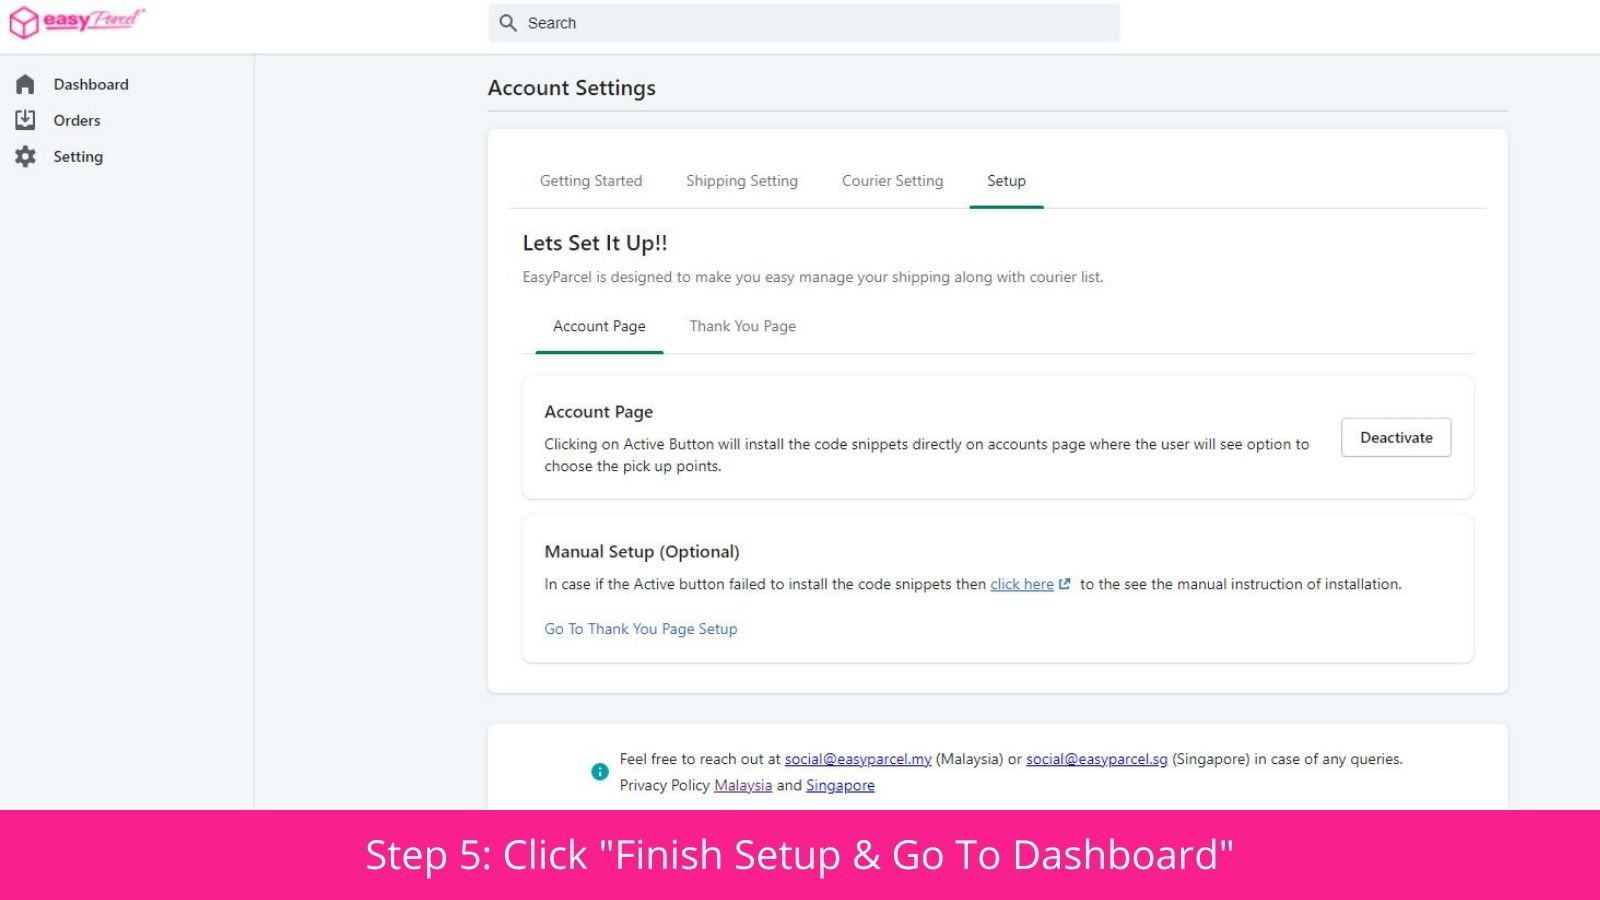 Step 5: Click "Finish Setup & Go To Dashboard"